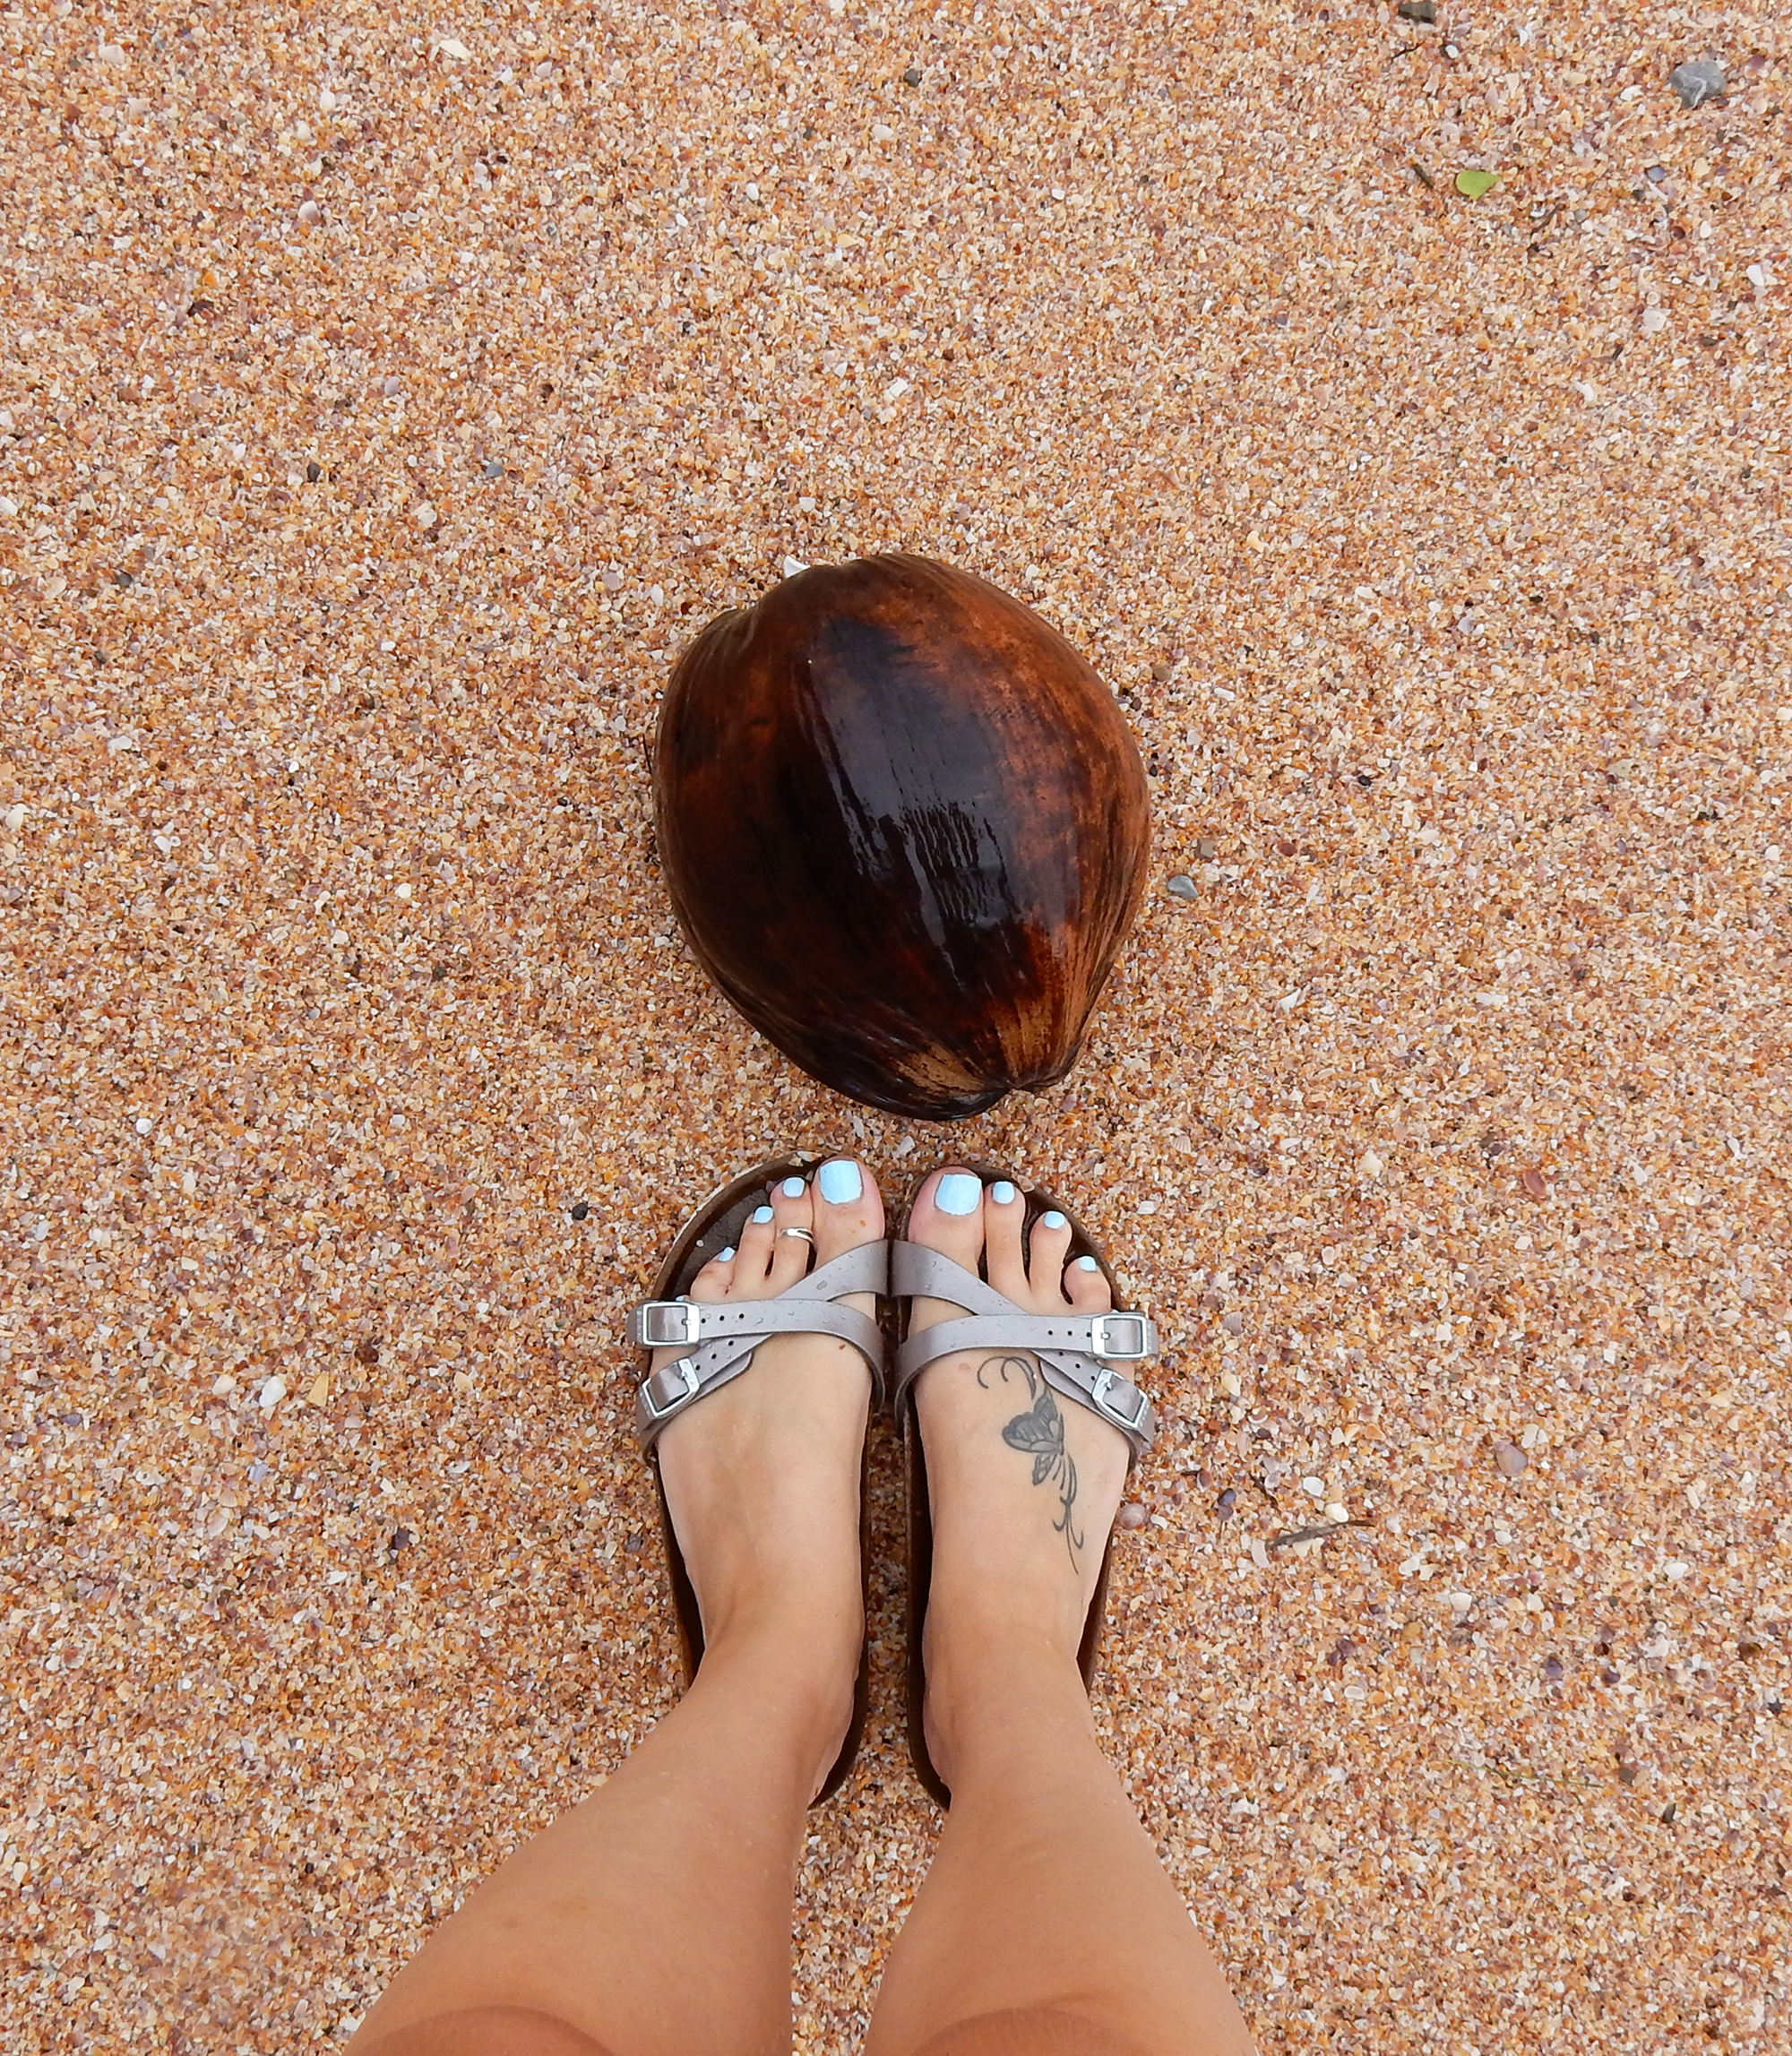  Birkenstock gezonde slippers goed voetbed vakantie krabi thailand Ao Nang Beach lifestyle by linda 